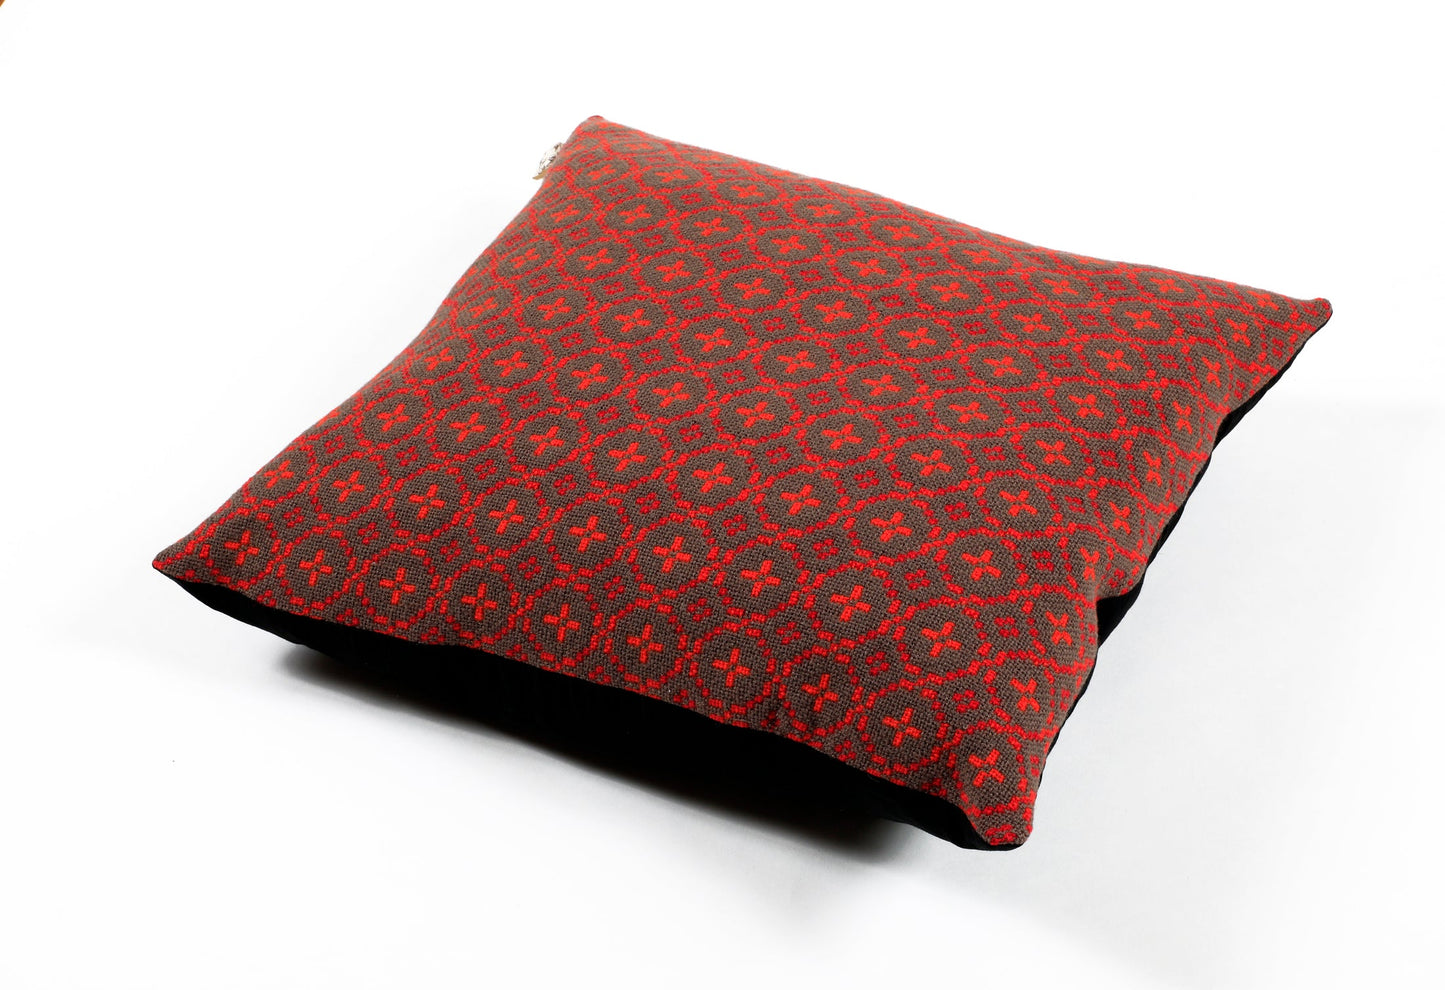 Handwoven Decorative Pillow